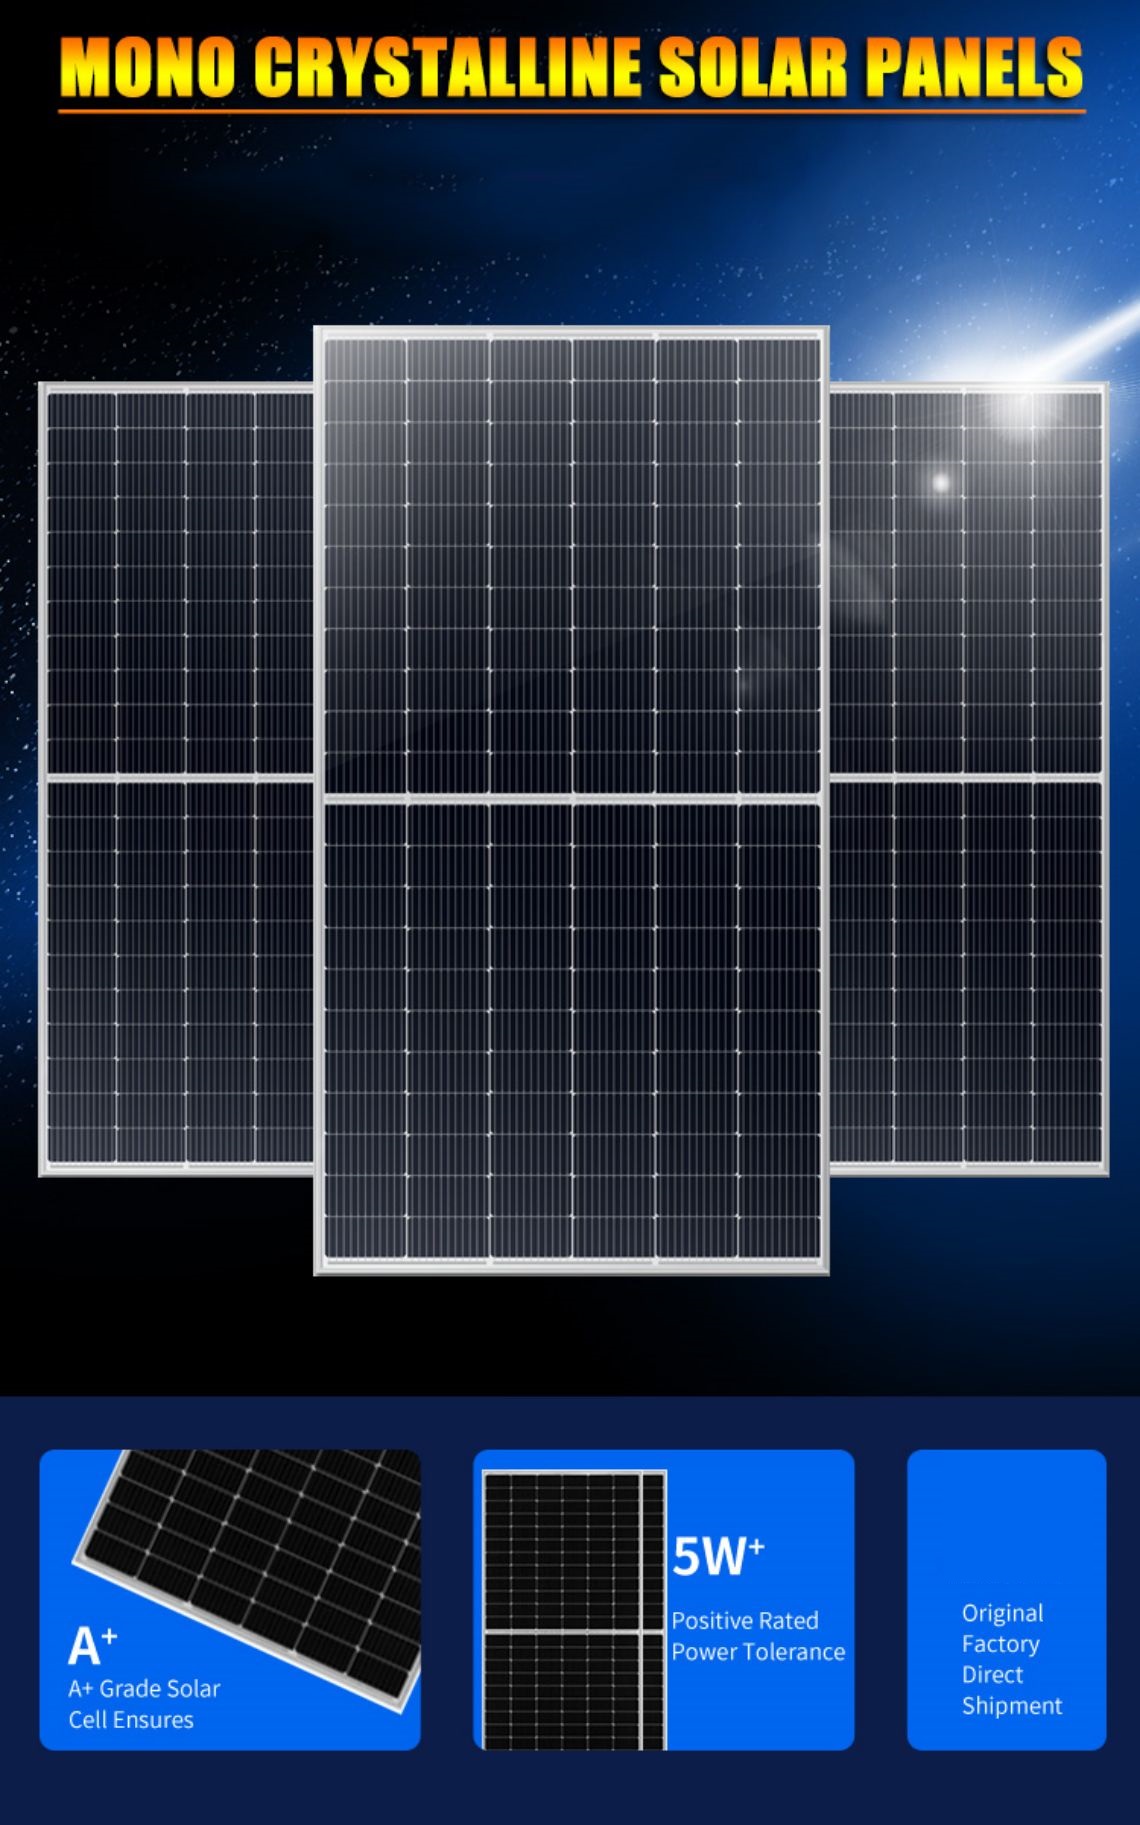 Monocrystalline silicon solar panels